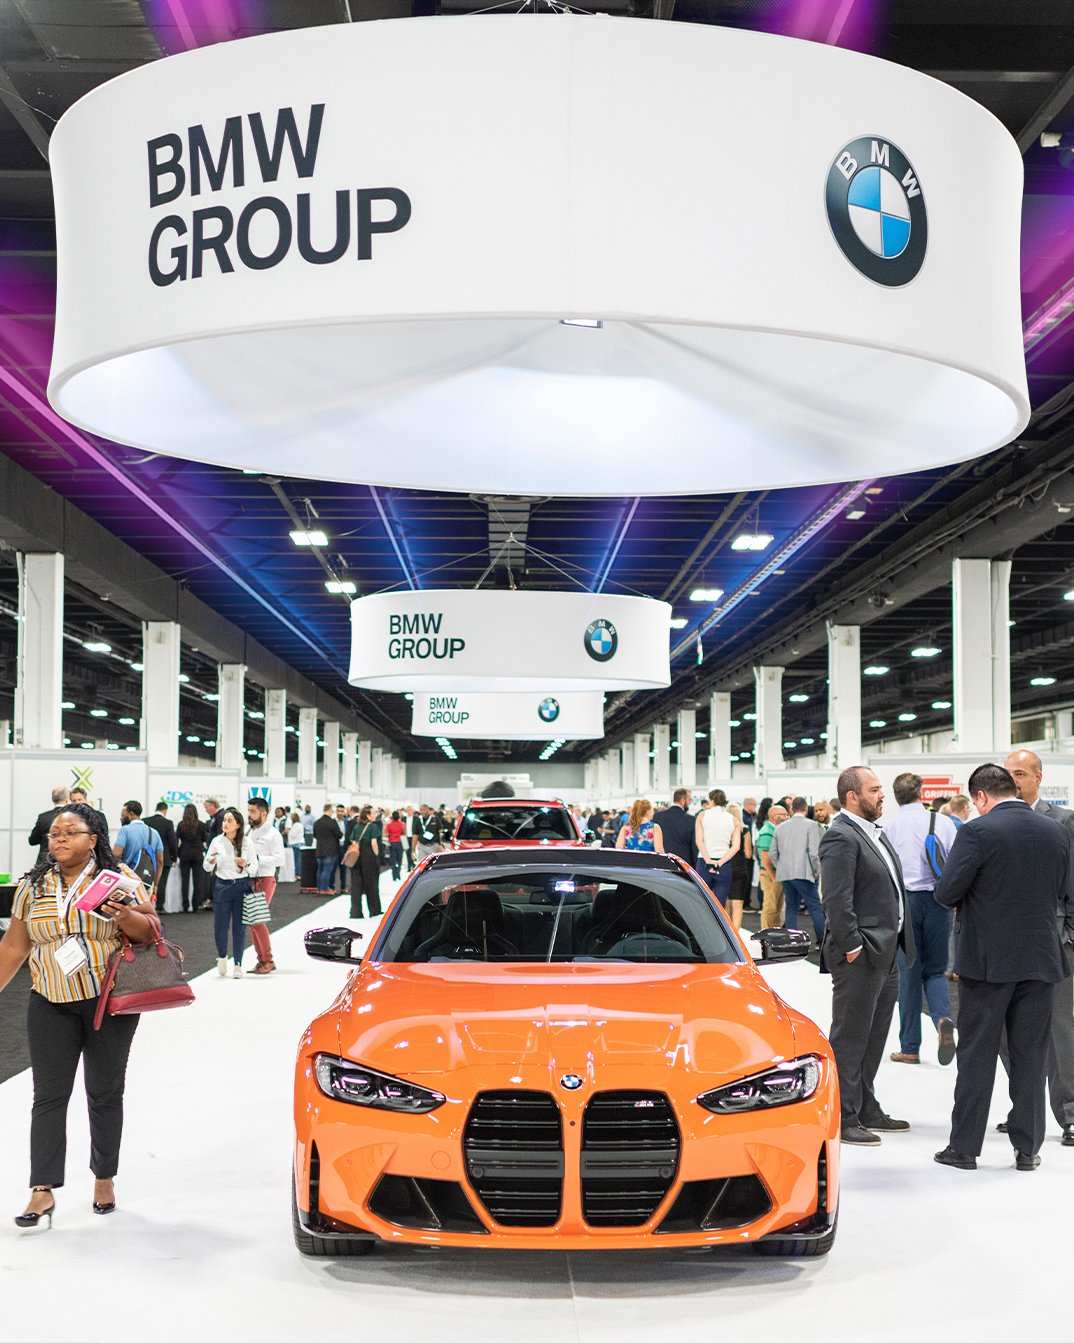 XChange BMW Supplier Diversity Group